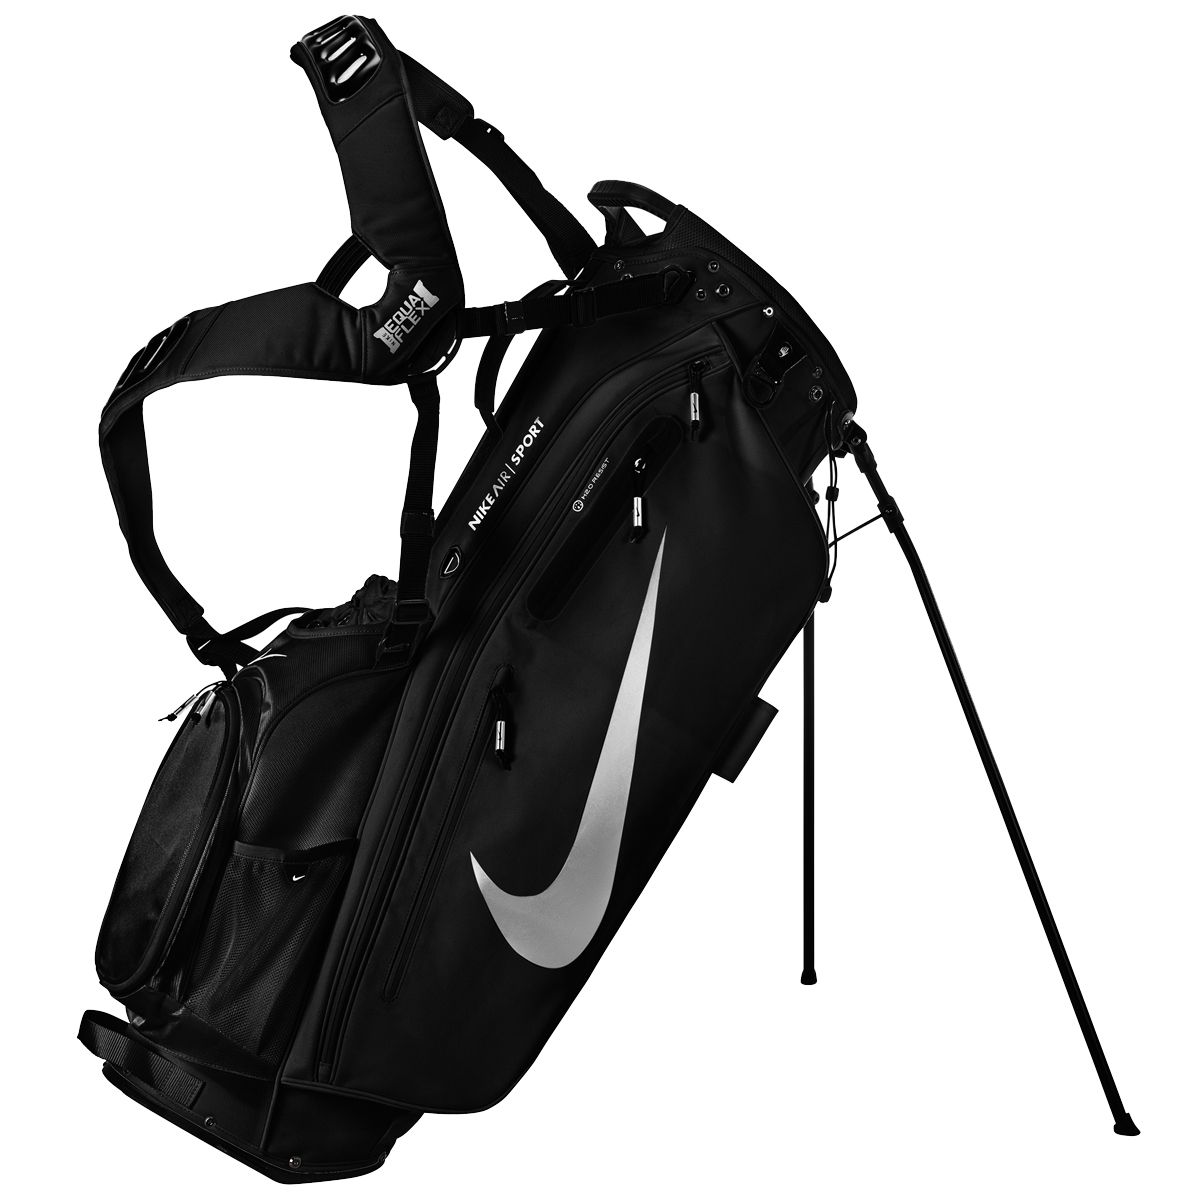 Nike Golf Bags for sale | eBay